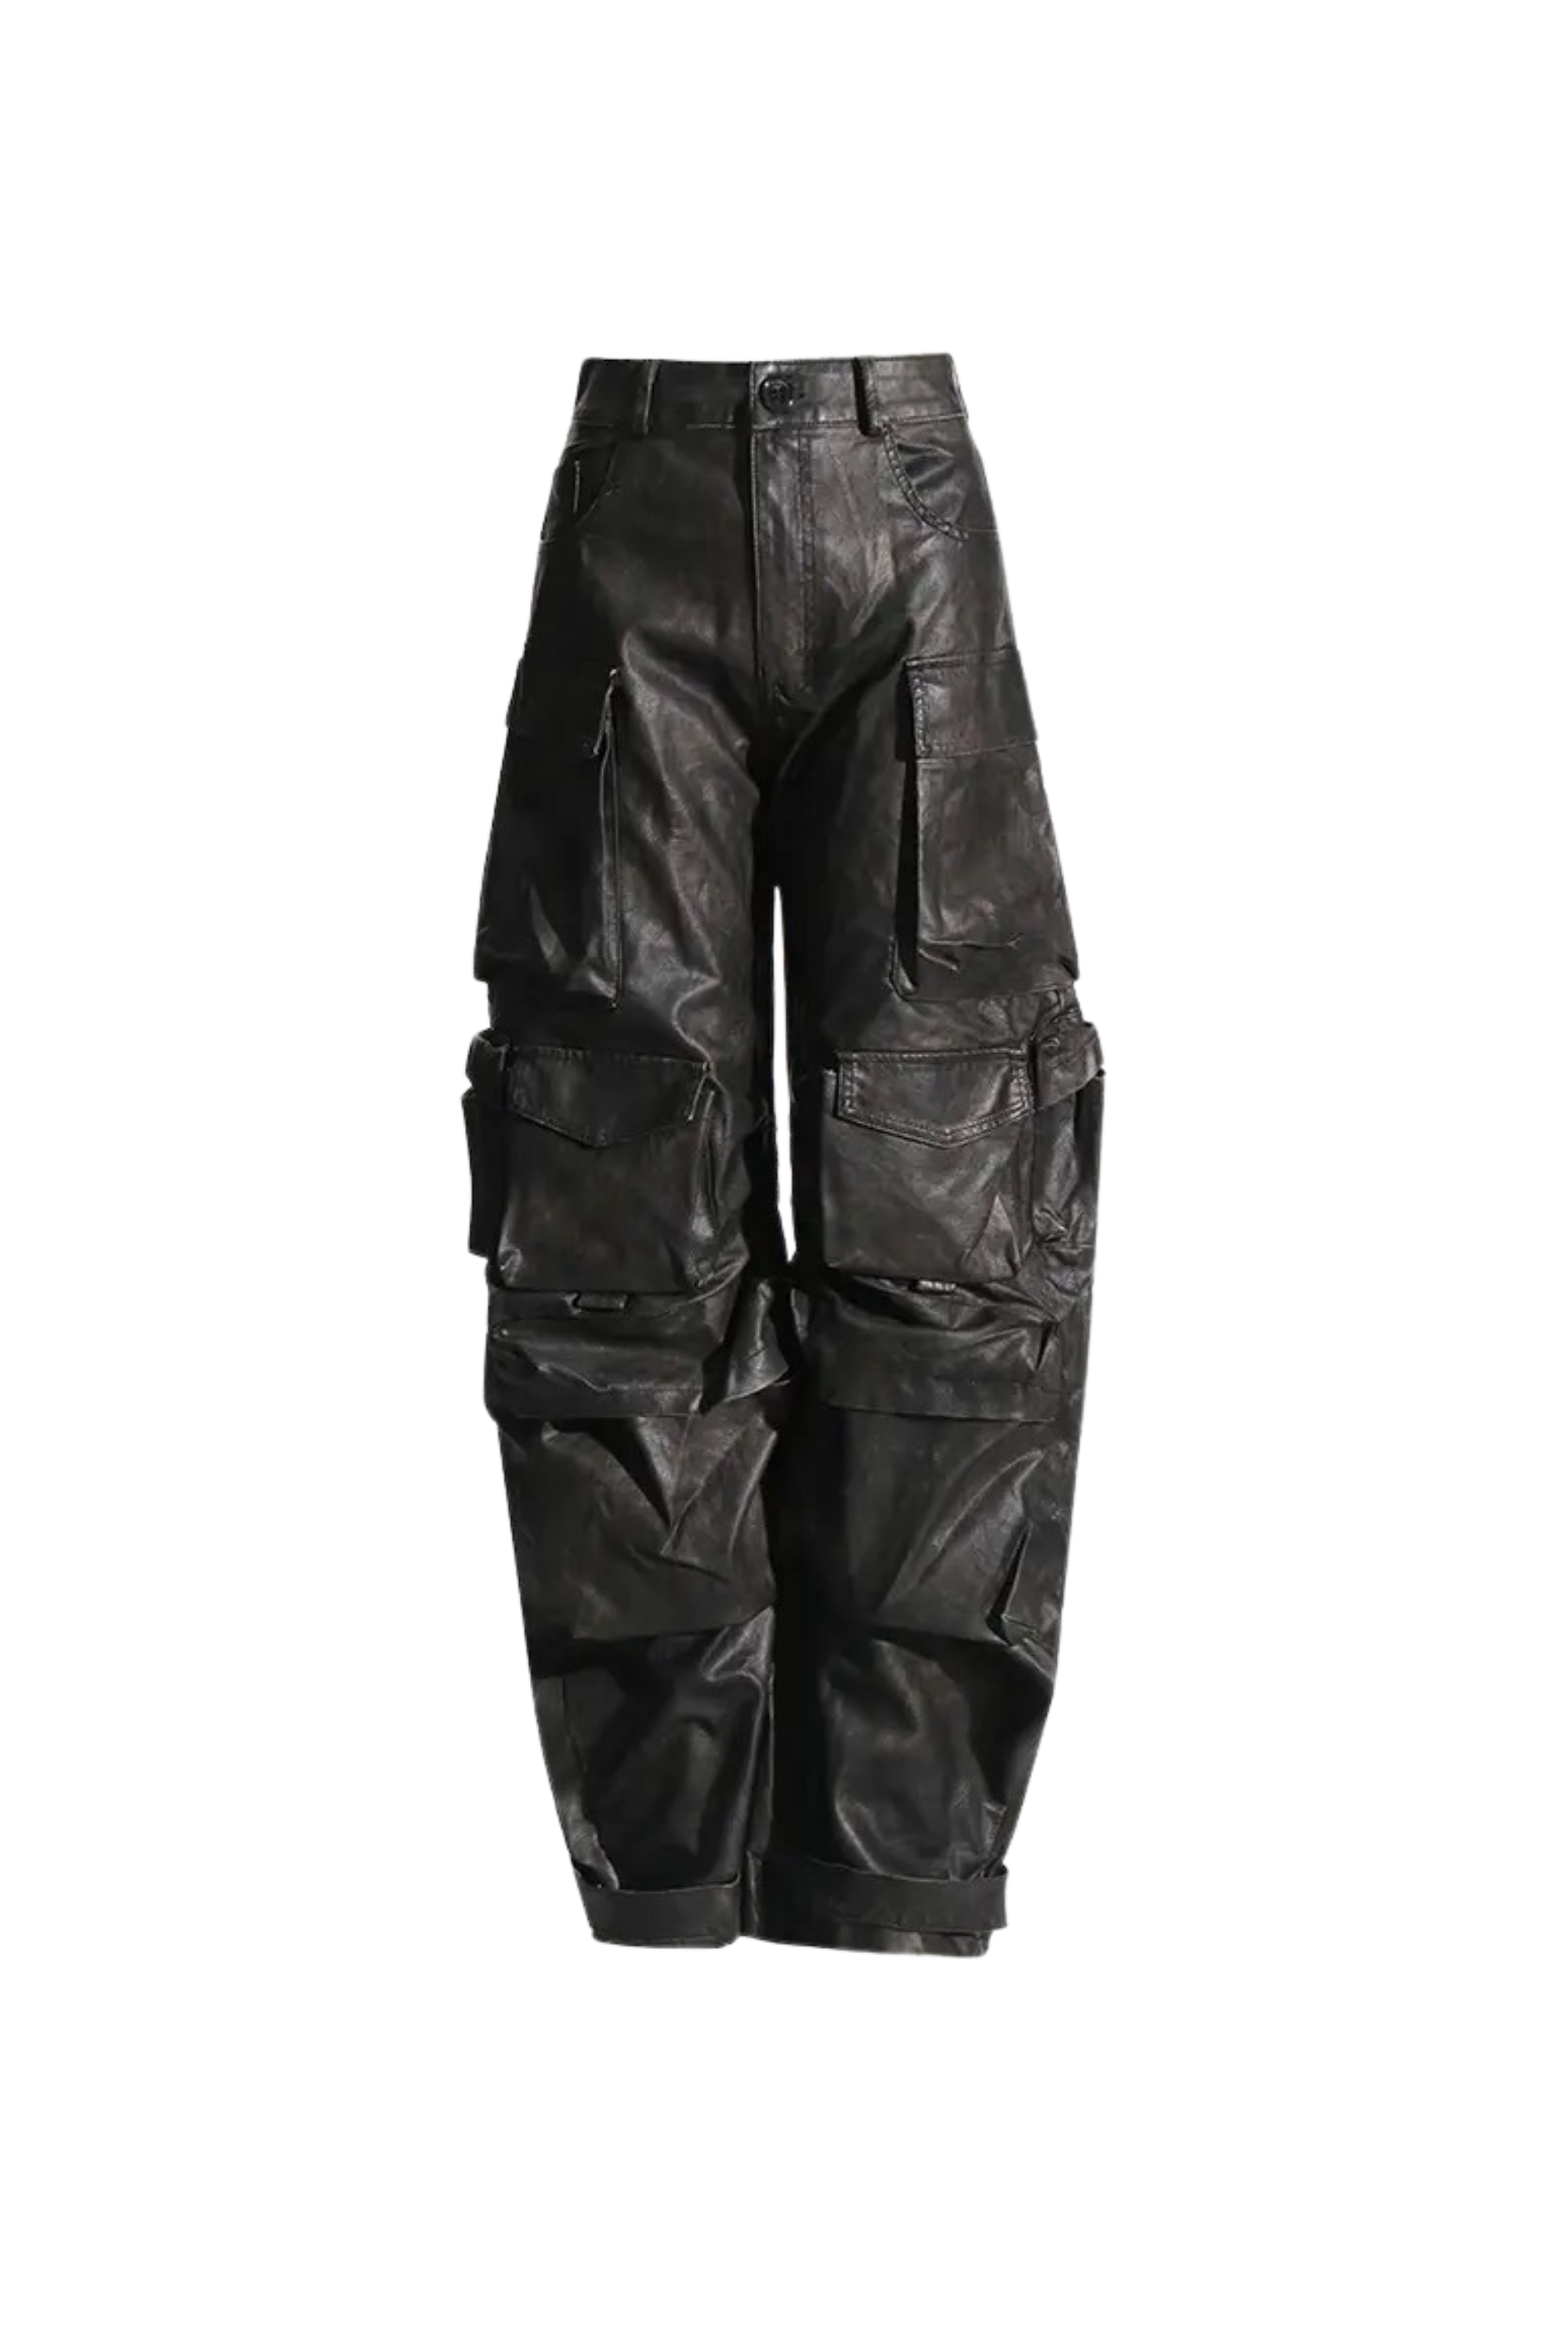 GOLDxTEAL vintage vegan leather cargo pants.